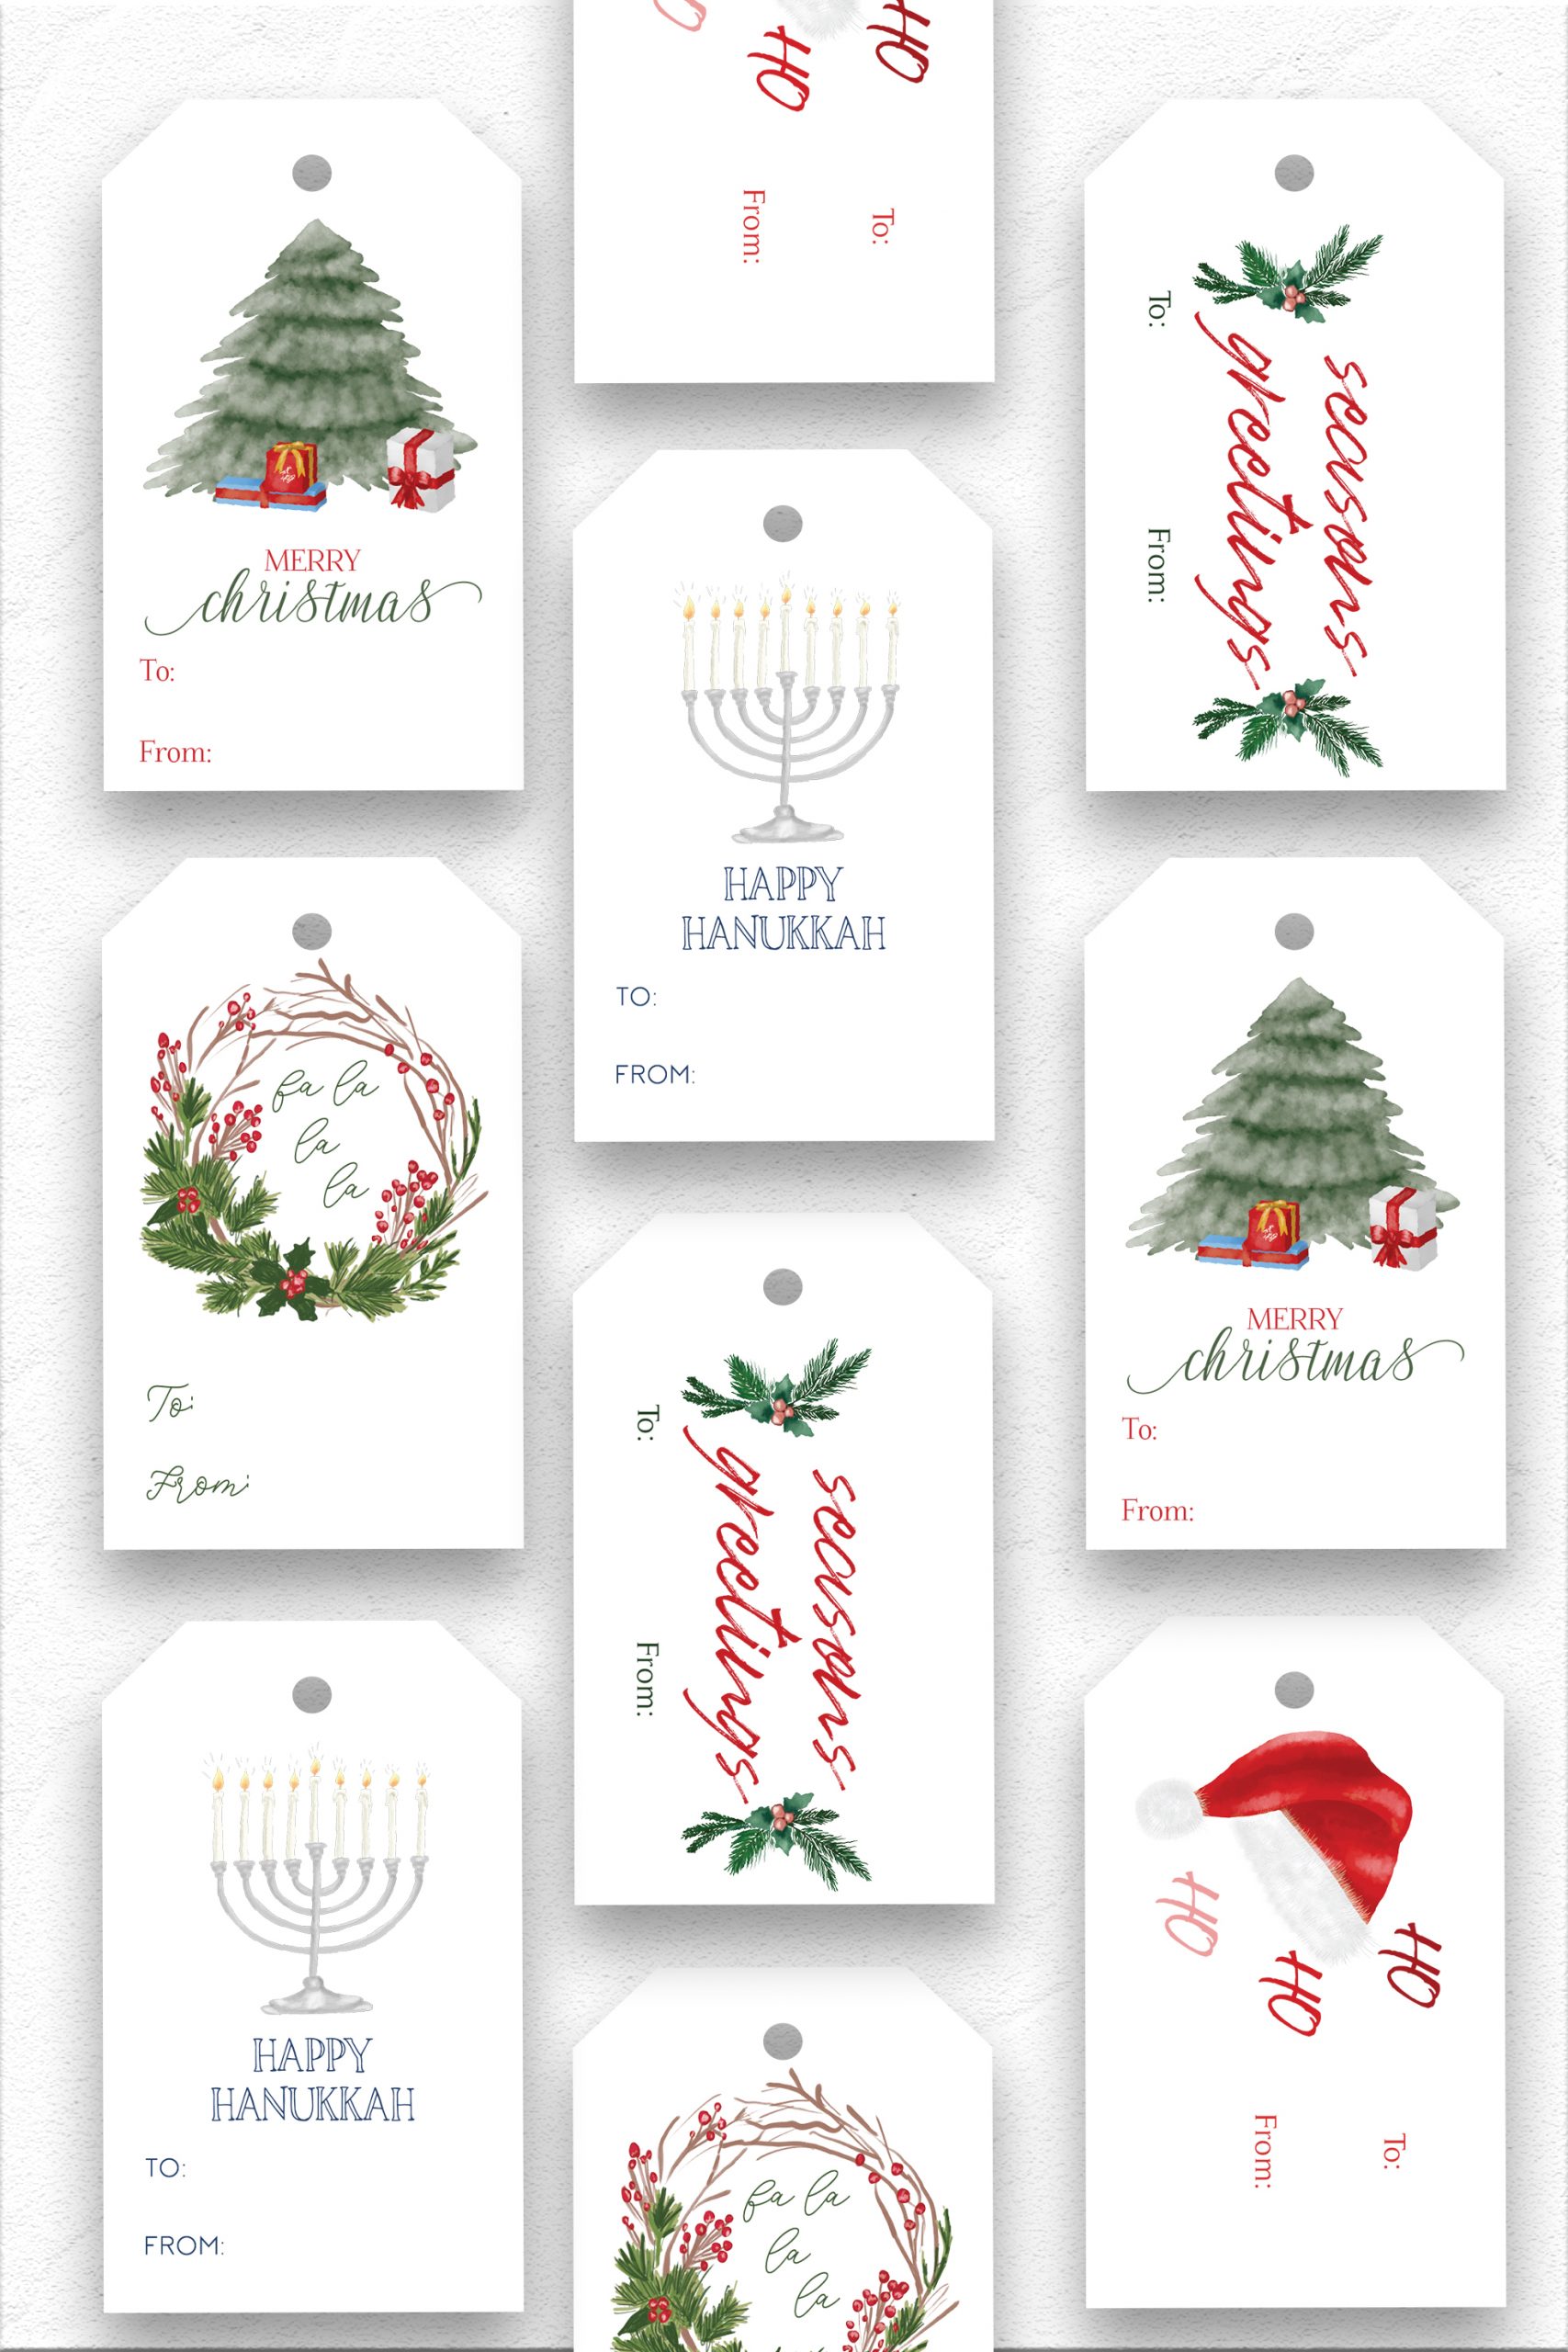 Mix of Holiday Tags - Christmas and Hanukkah options